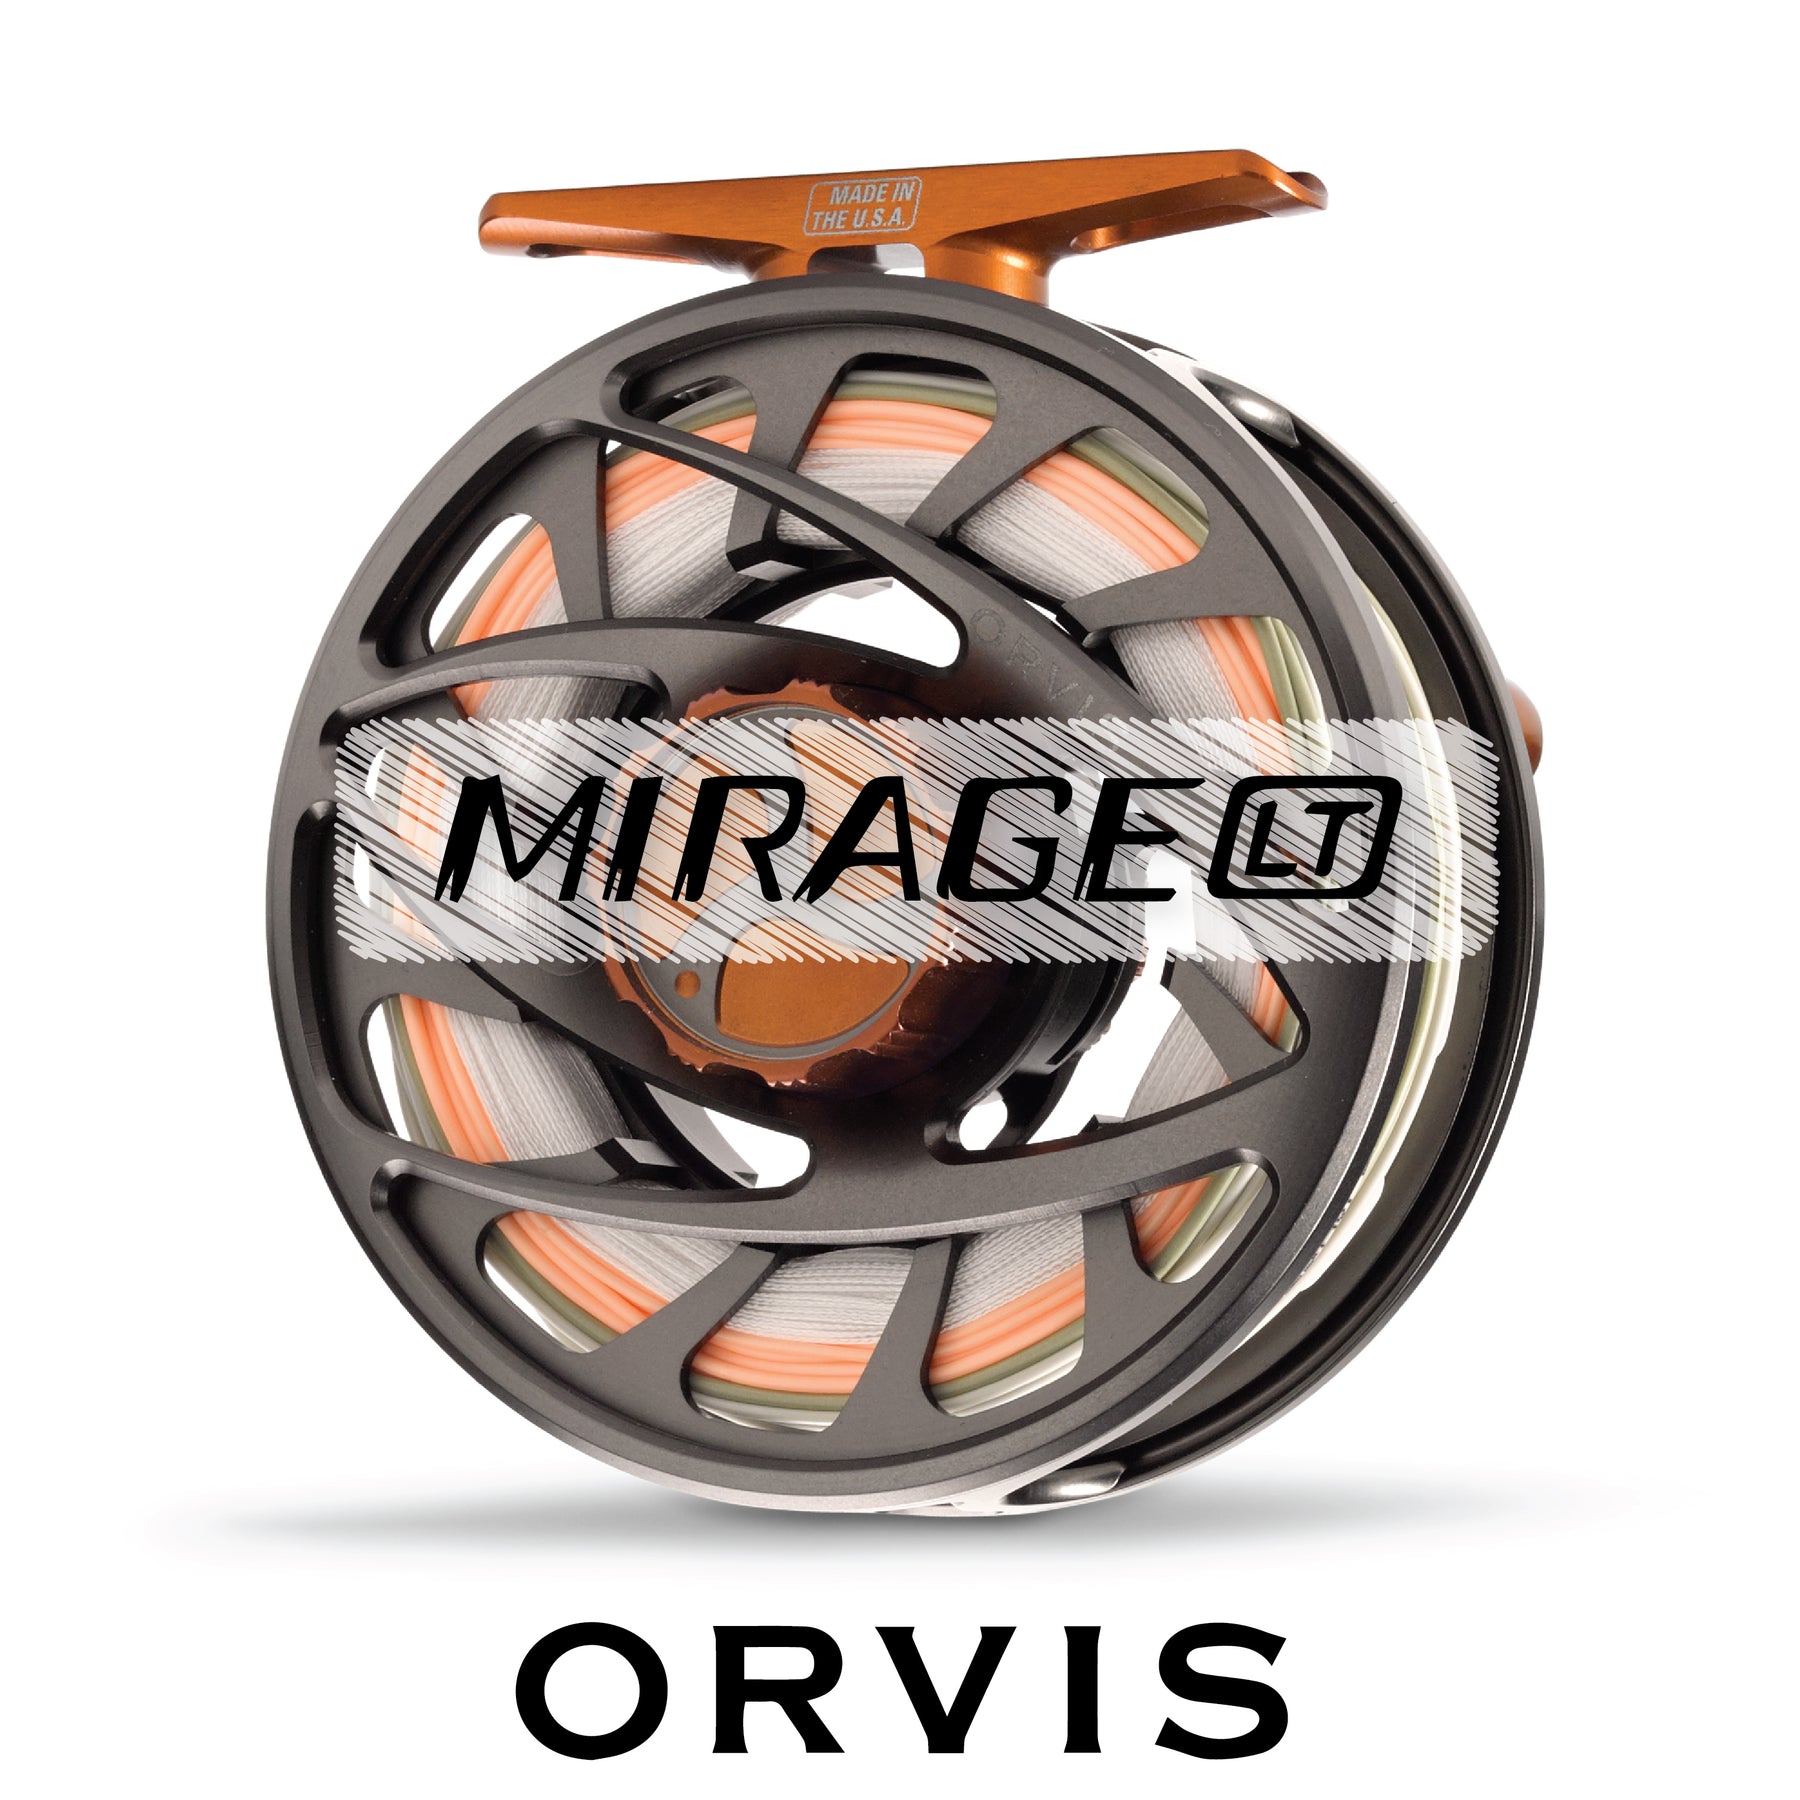 Orvis Mirage LT Fly Reel - Olive - III